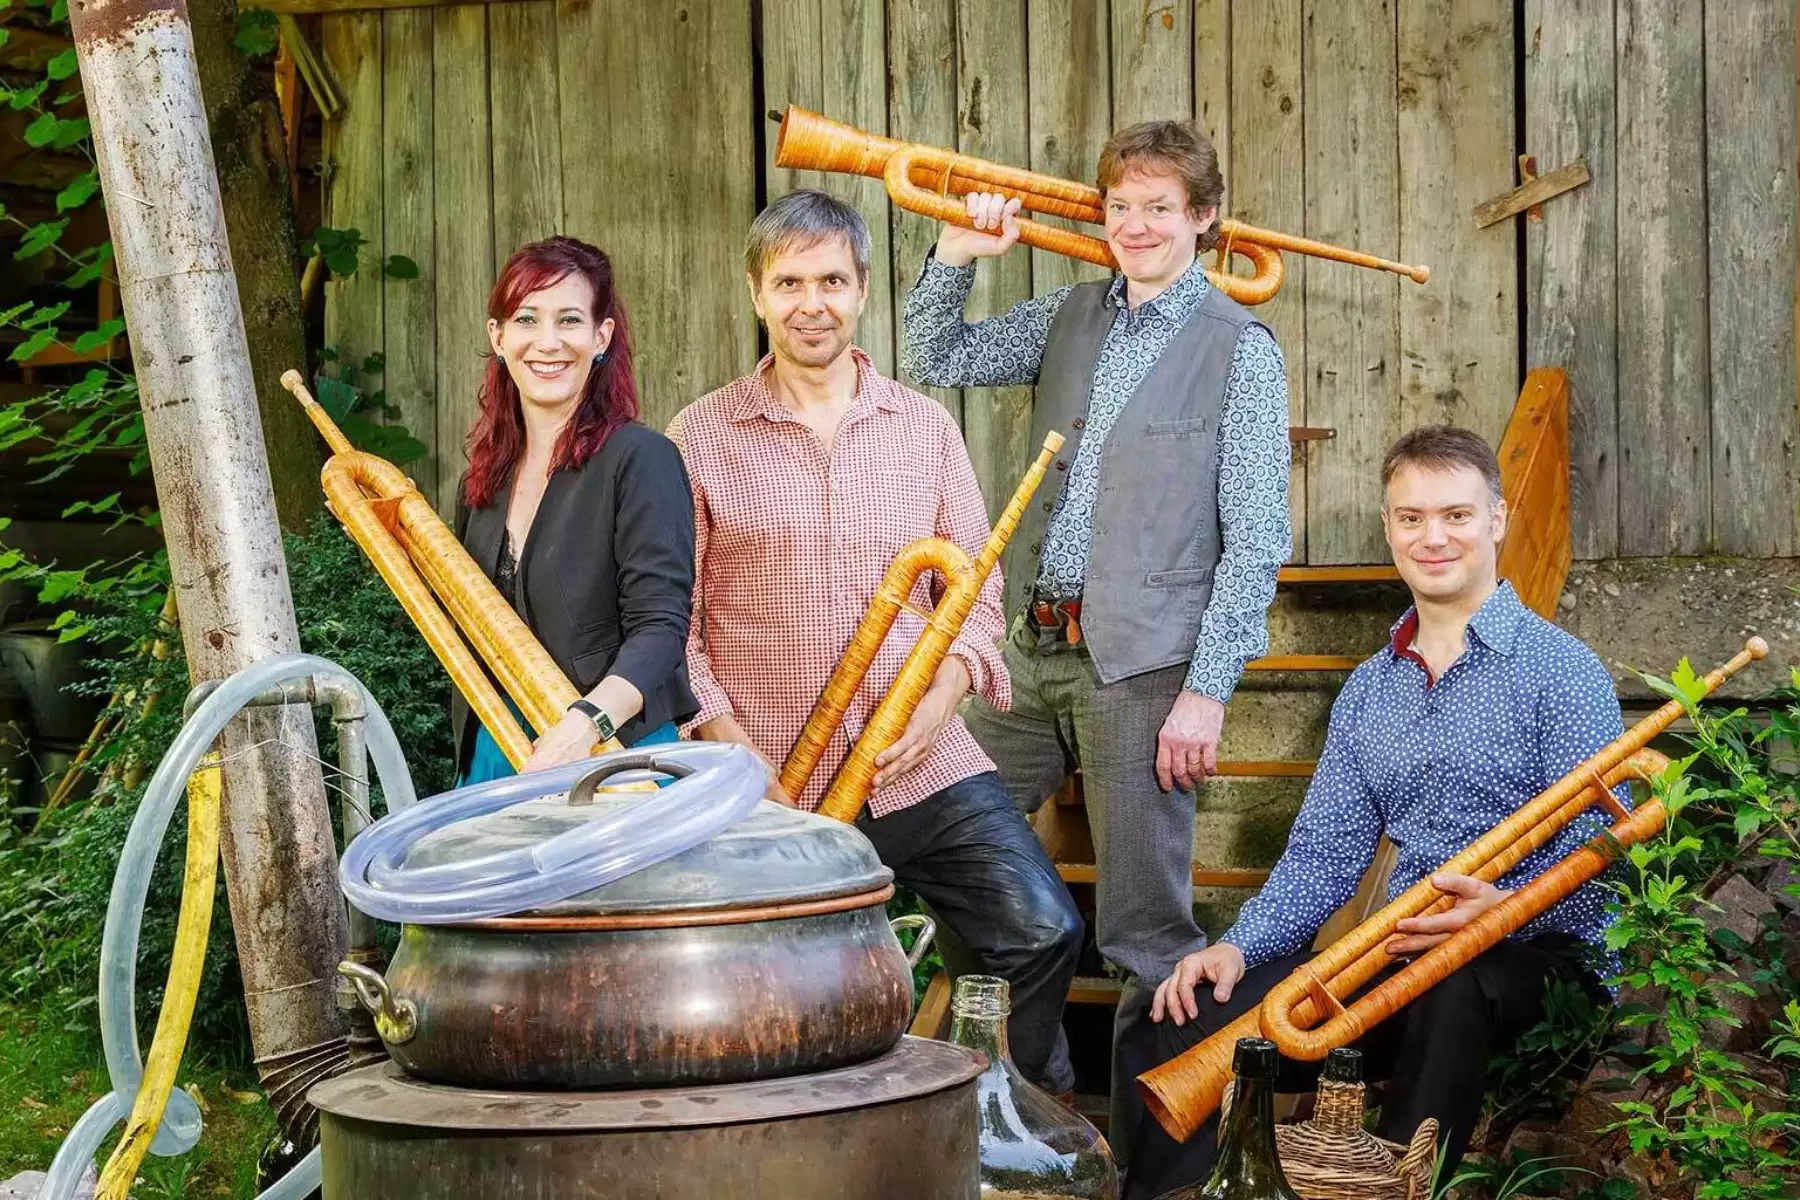 Hornroh Modern Alphorn Quartet